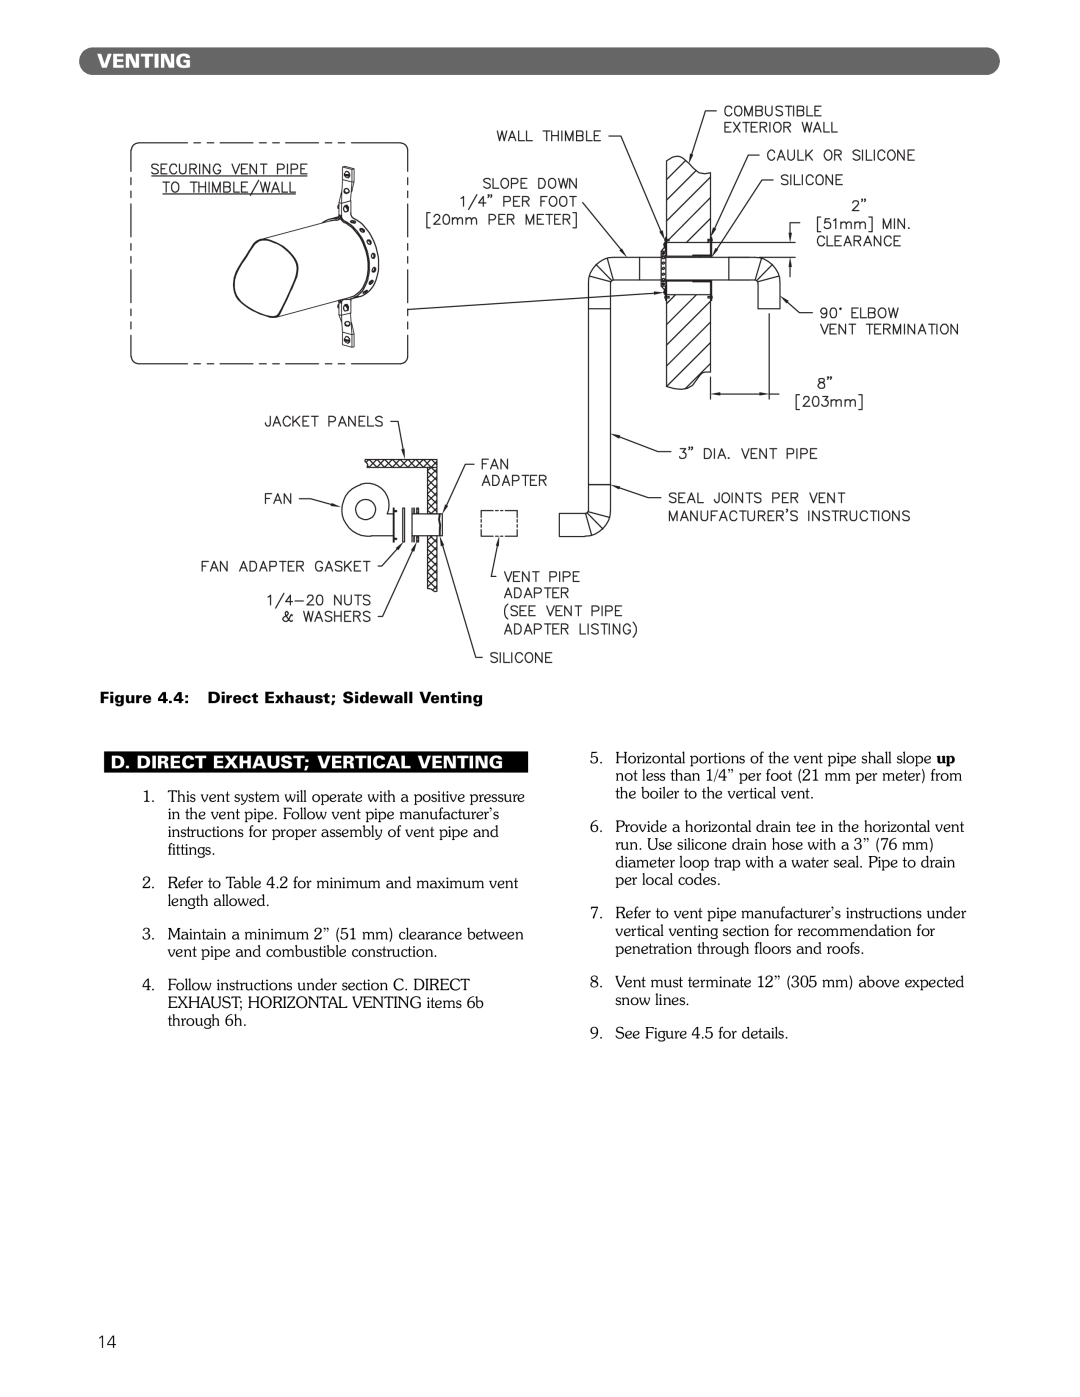 PB Heat DE manual D. Direct Exhaust Vertical Venting, 4 Direct Exhaust Sidewall Venting 